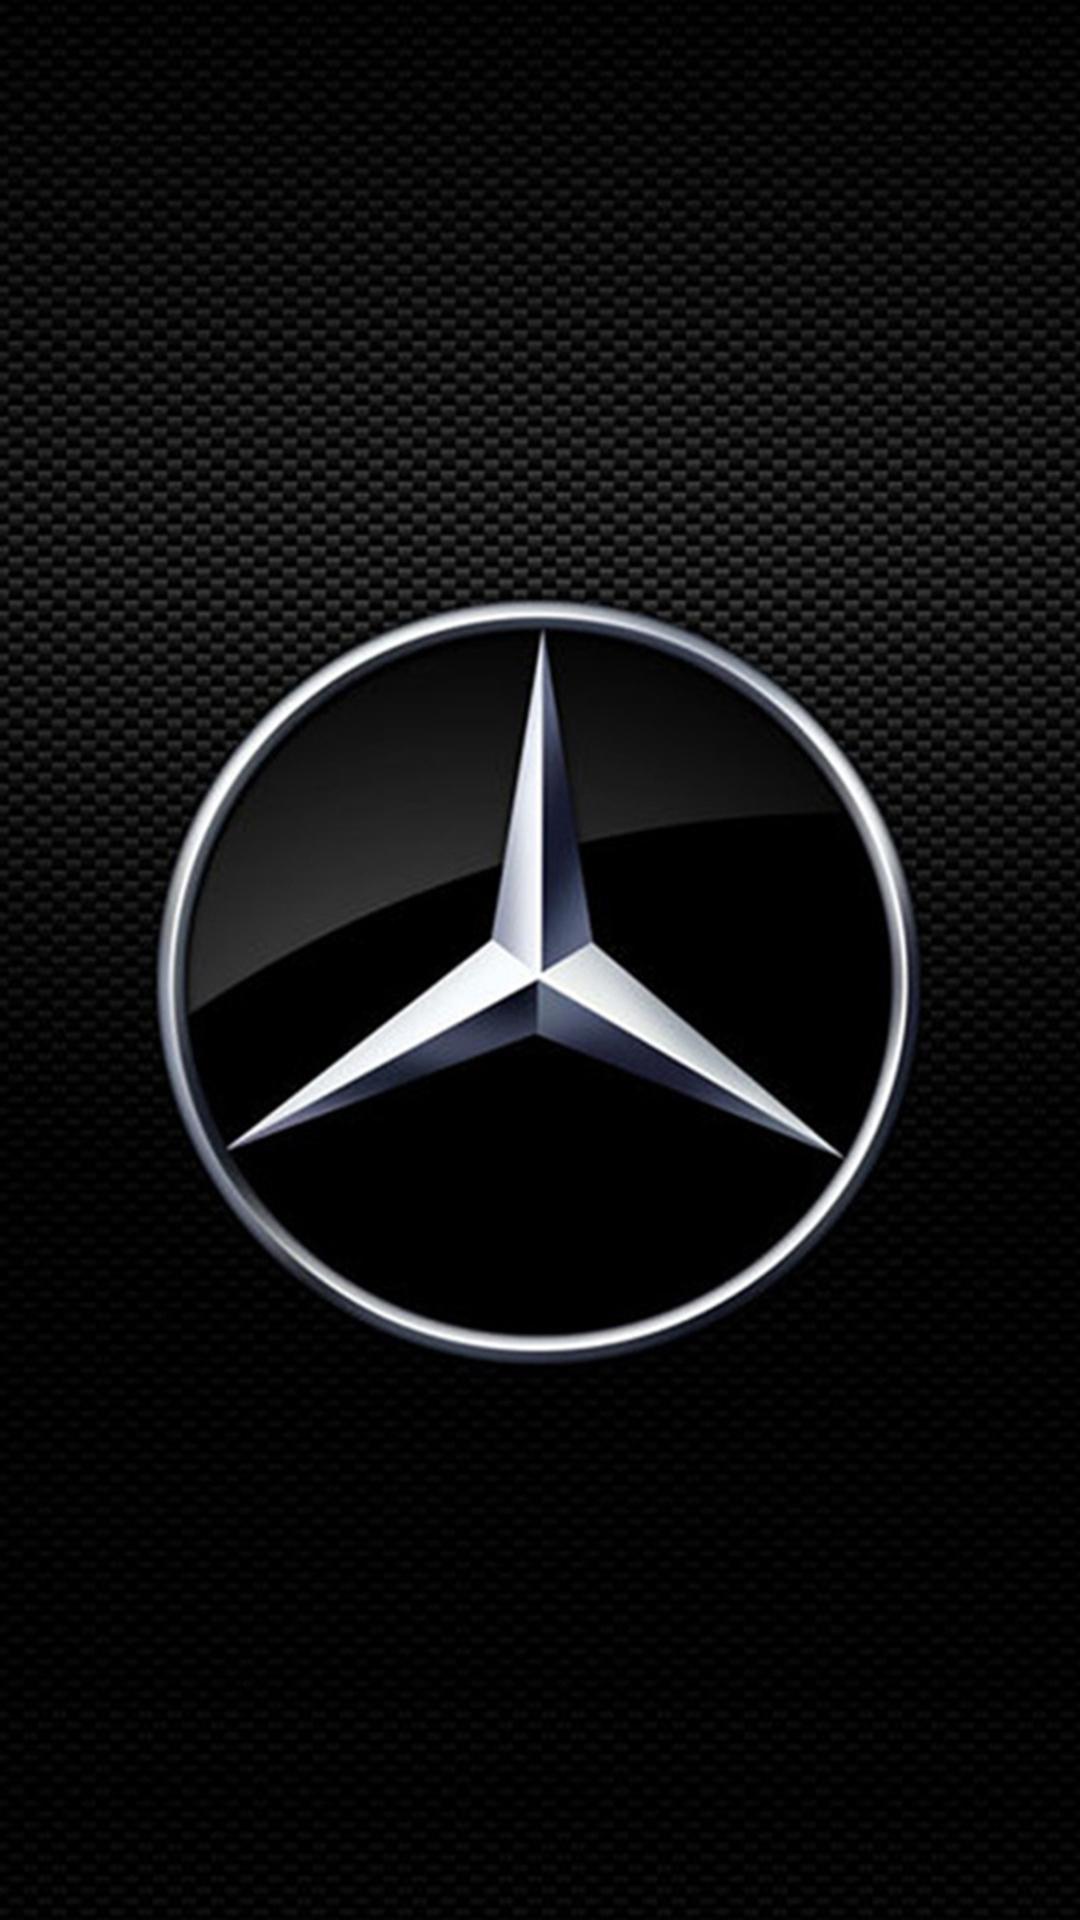 50+] Mercedes Benz Logo Wallpapers